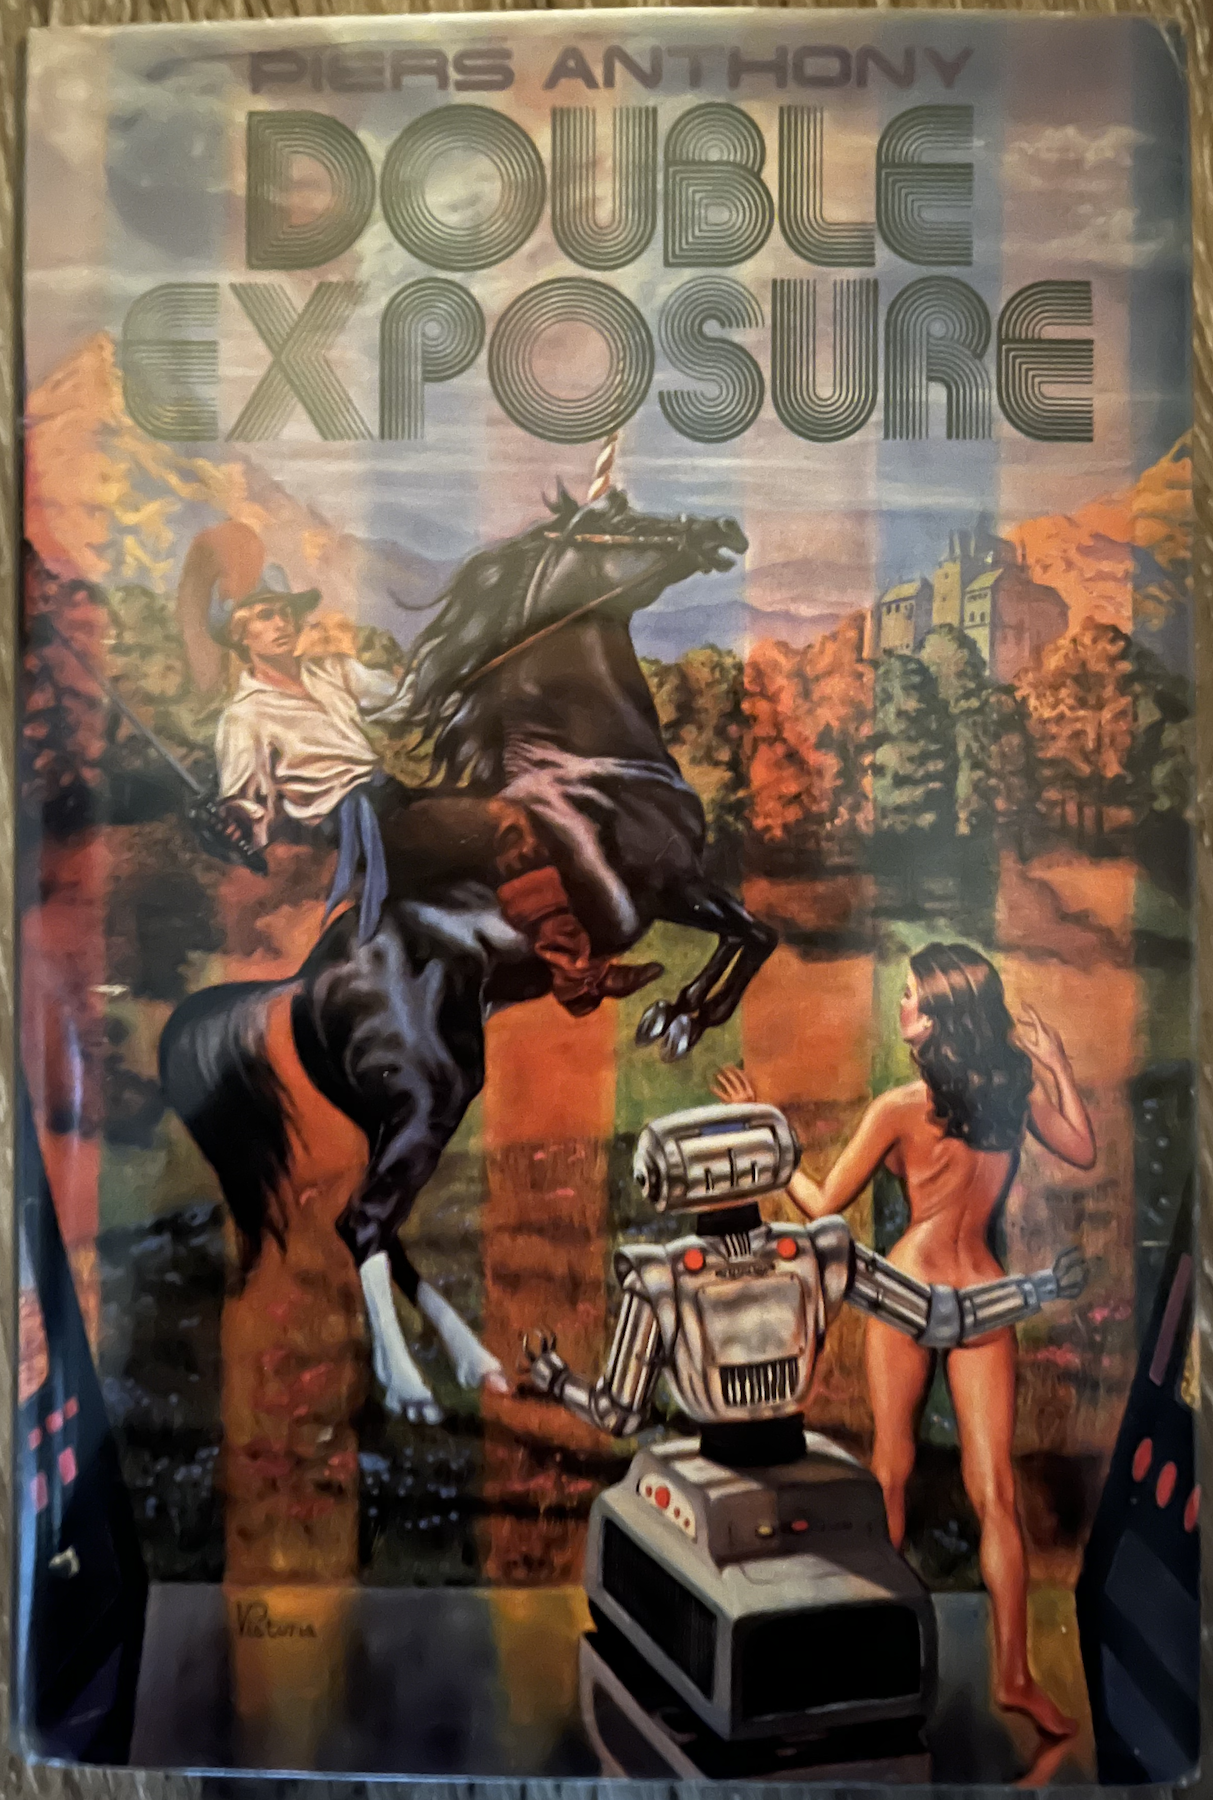 Double Exposure hardback cover